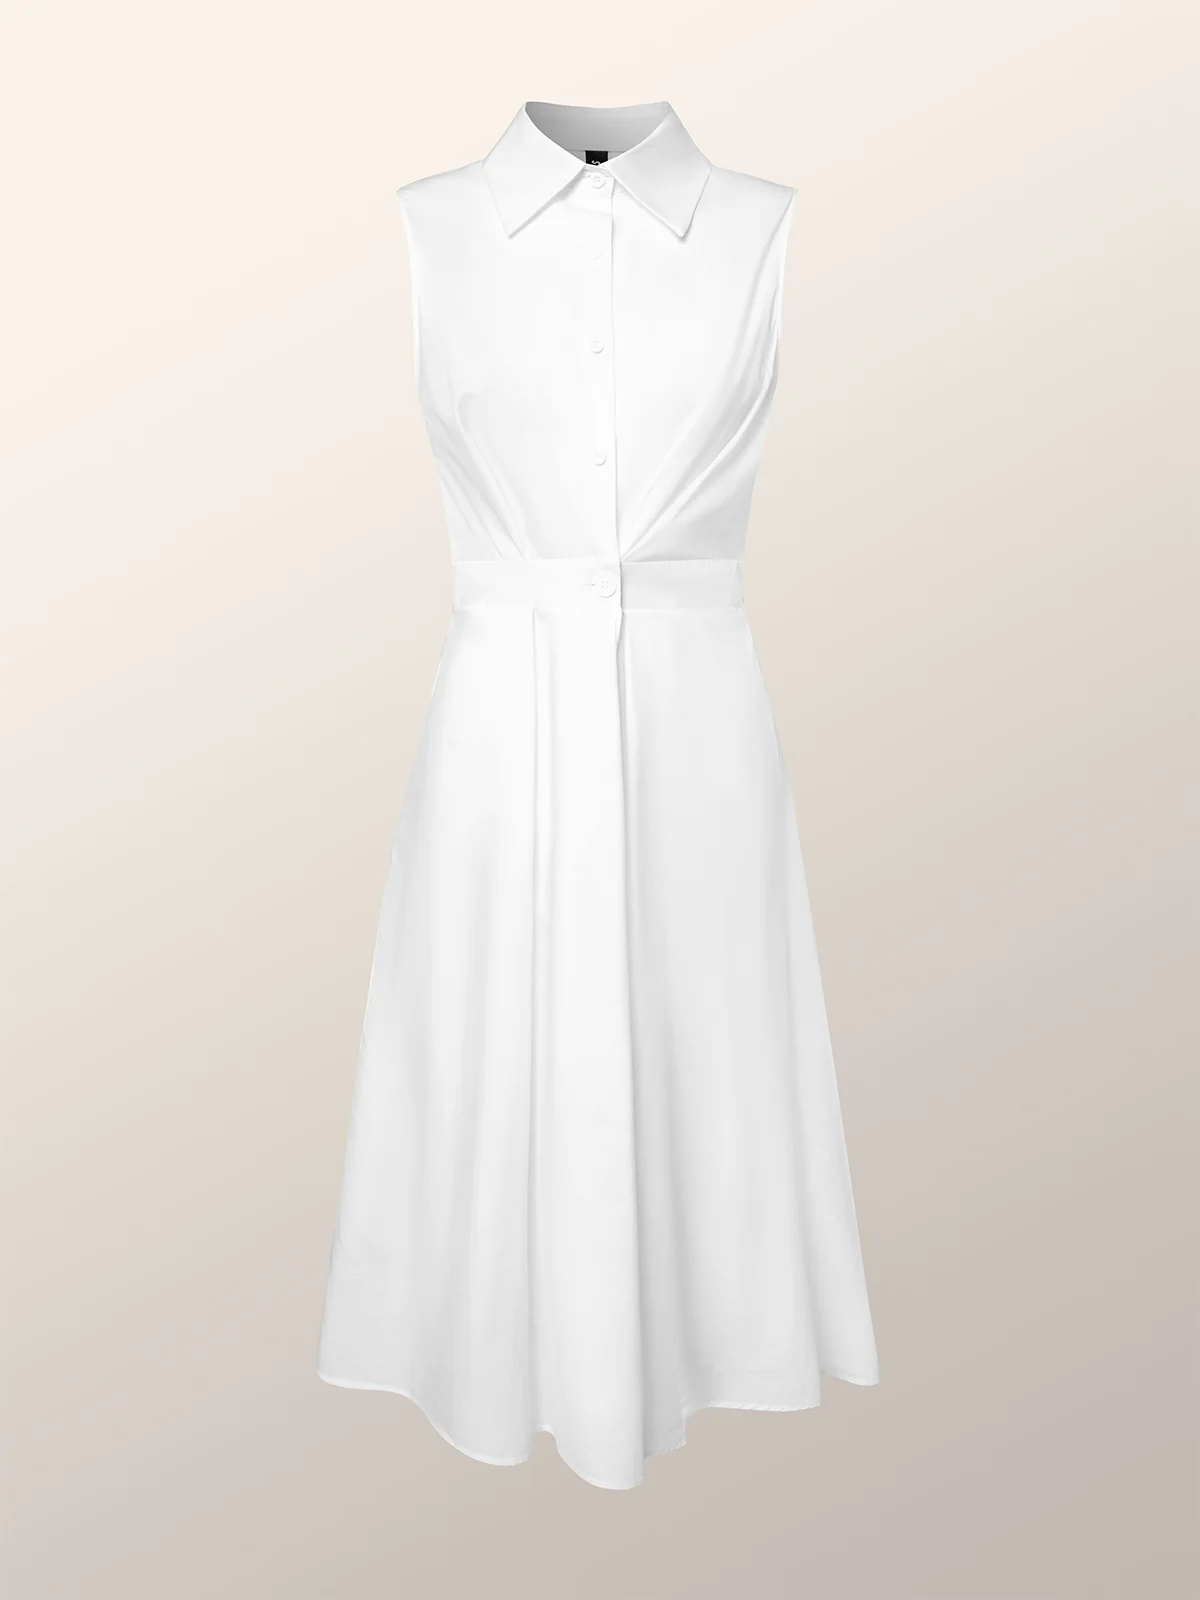 Daily White Shirt Collar Urban Cotton Dress